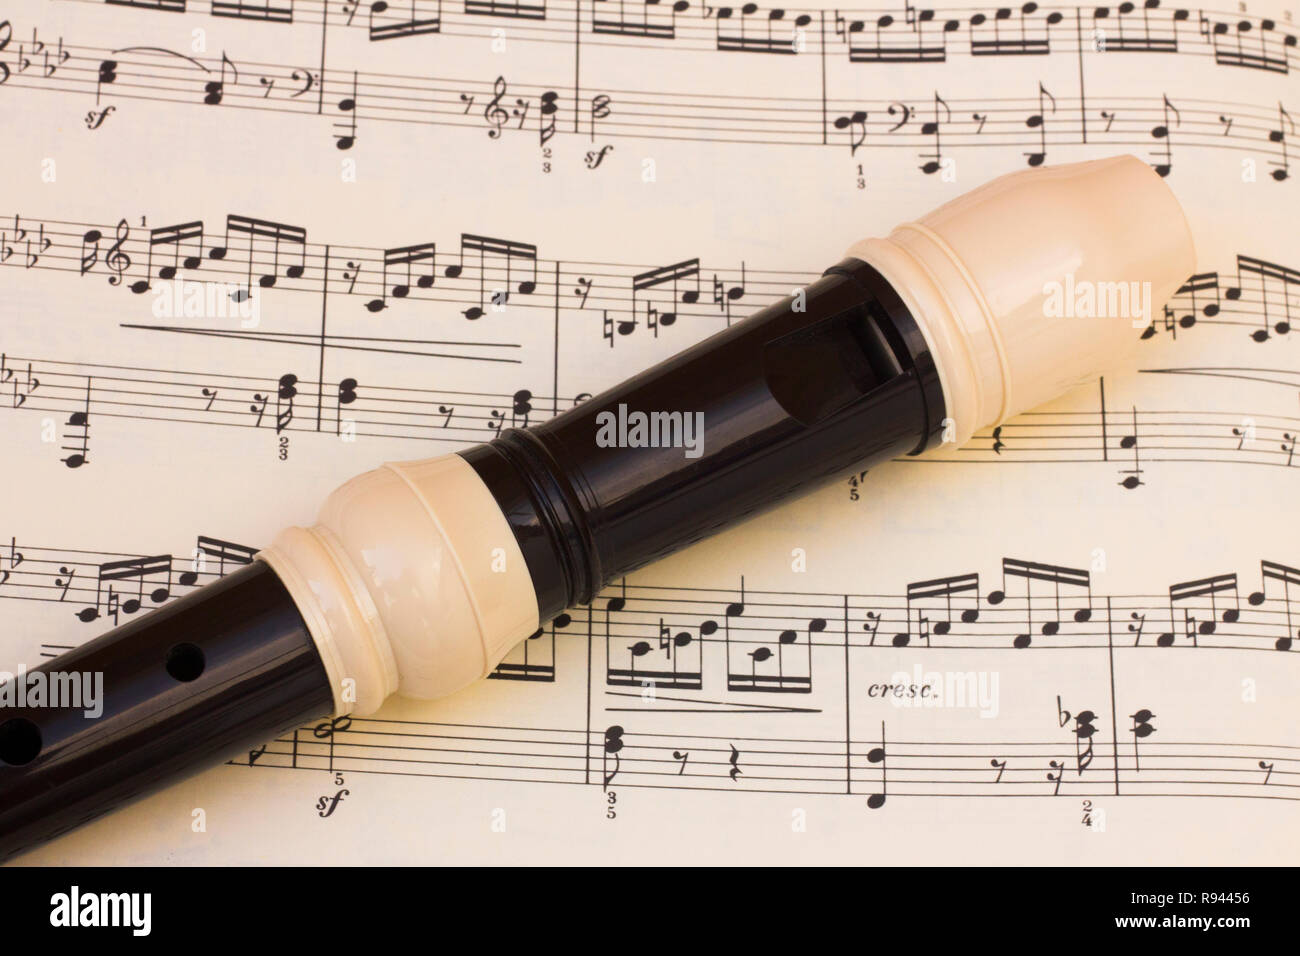 Plastic flute recorder over a music score sheet Stock Photo - Alamy